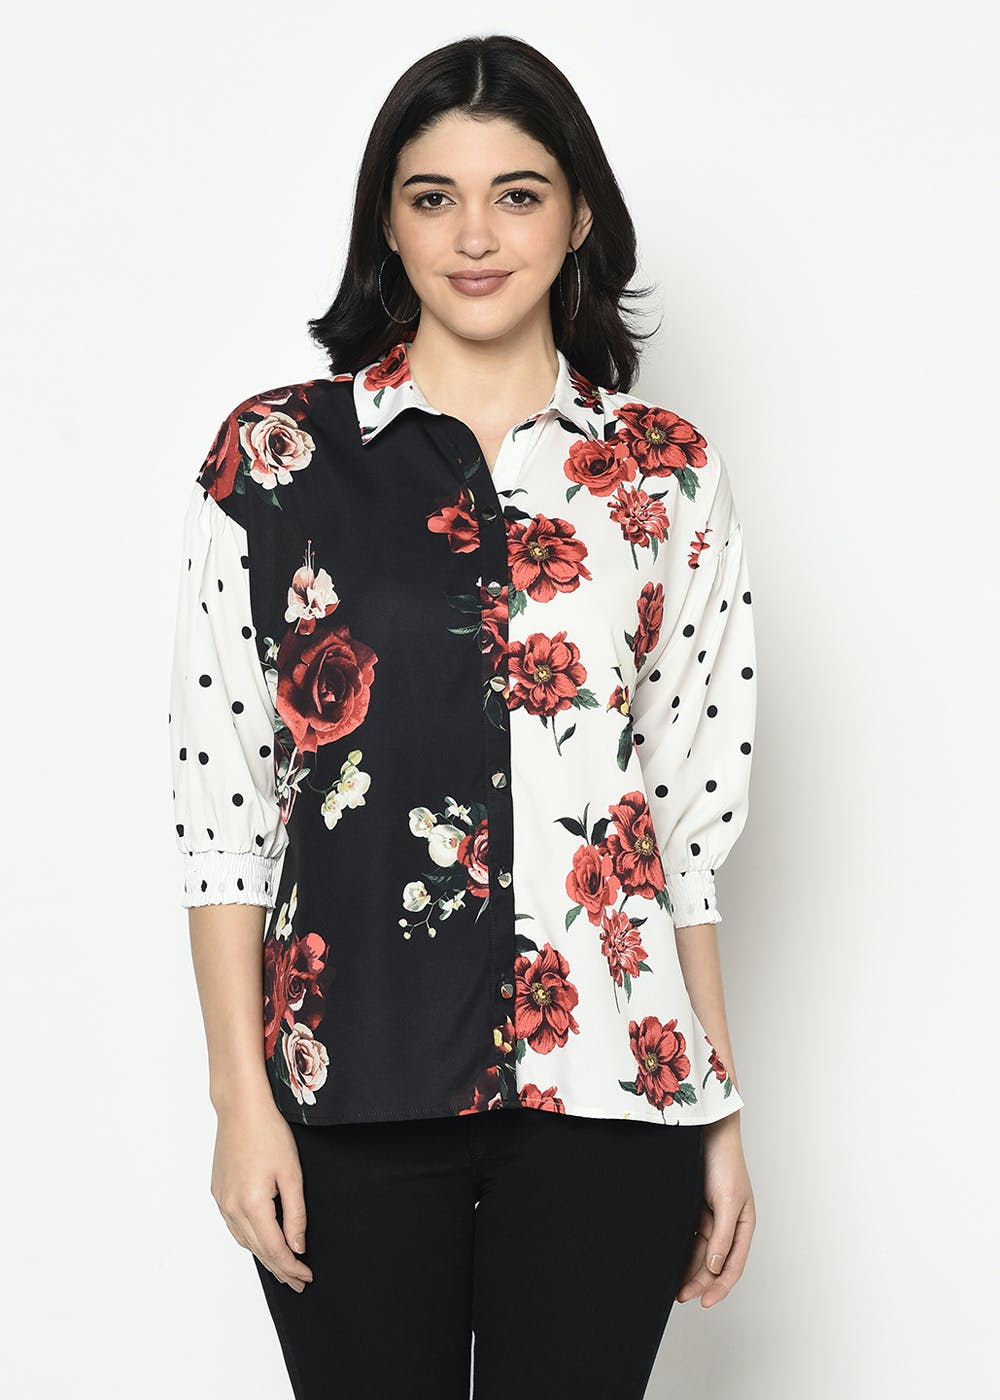 Get Floral Printed Half & Half Shirt at ₹ 979 | LBB Shop